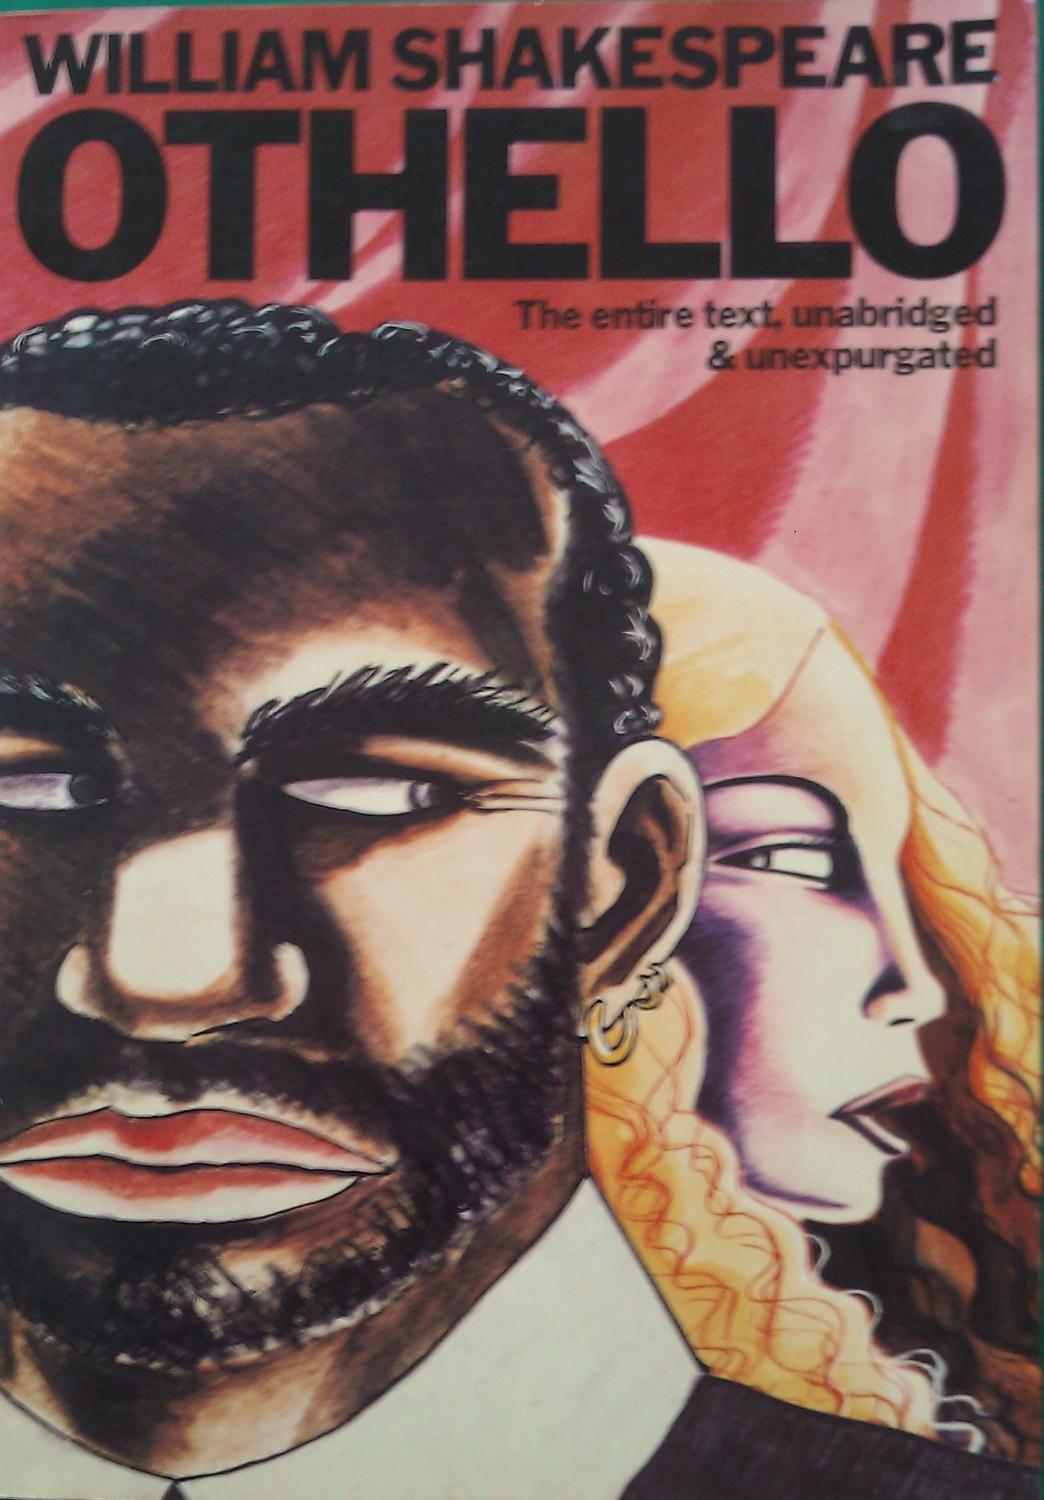 Othello: The Entire Text, Unabridged & Unexpurgated. - Shakespeare, William.